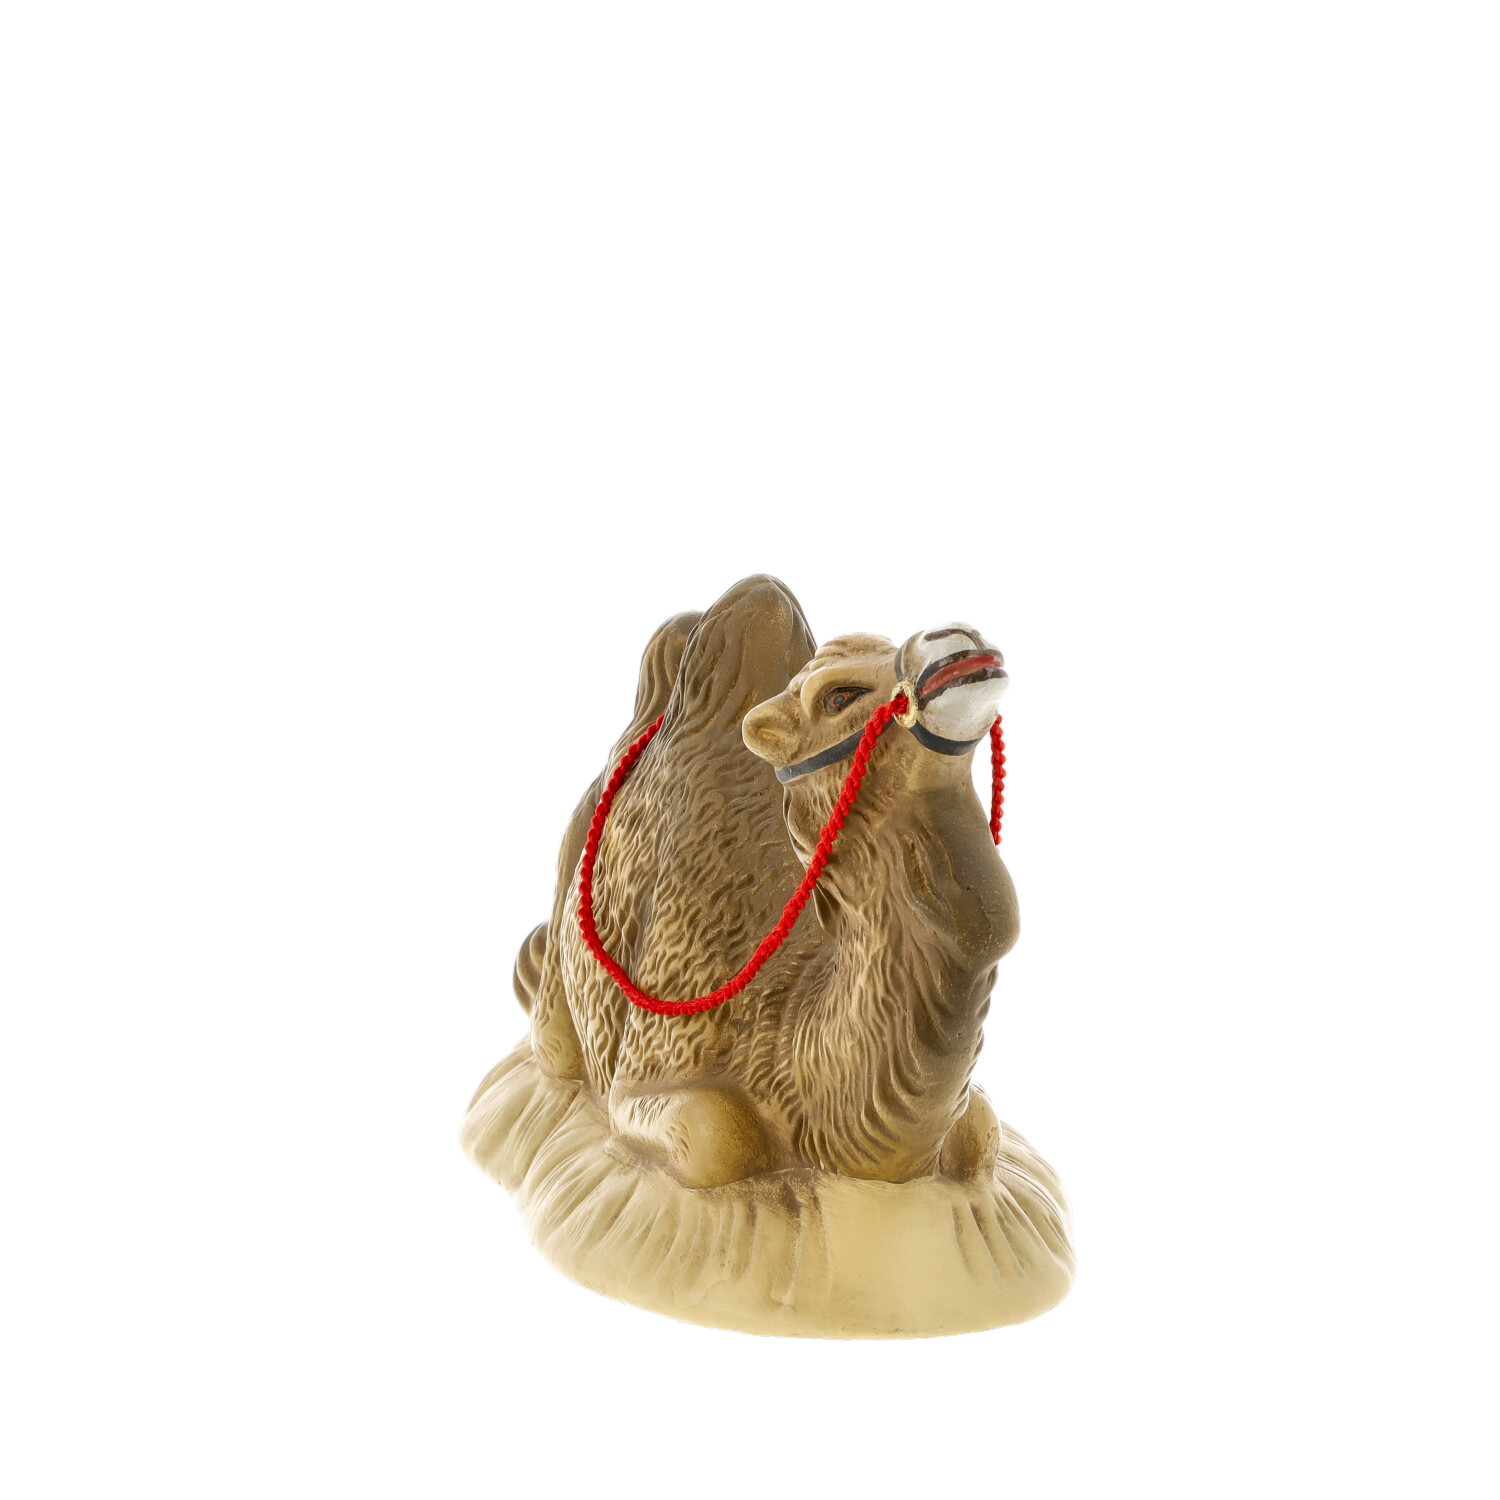 Kamel liegend, zu 14cm Marolin Krippenfiguren - made in Germany